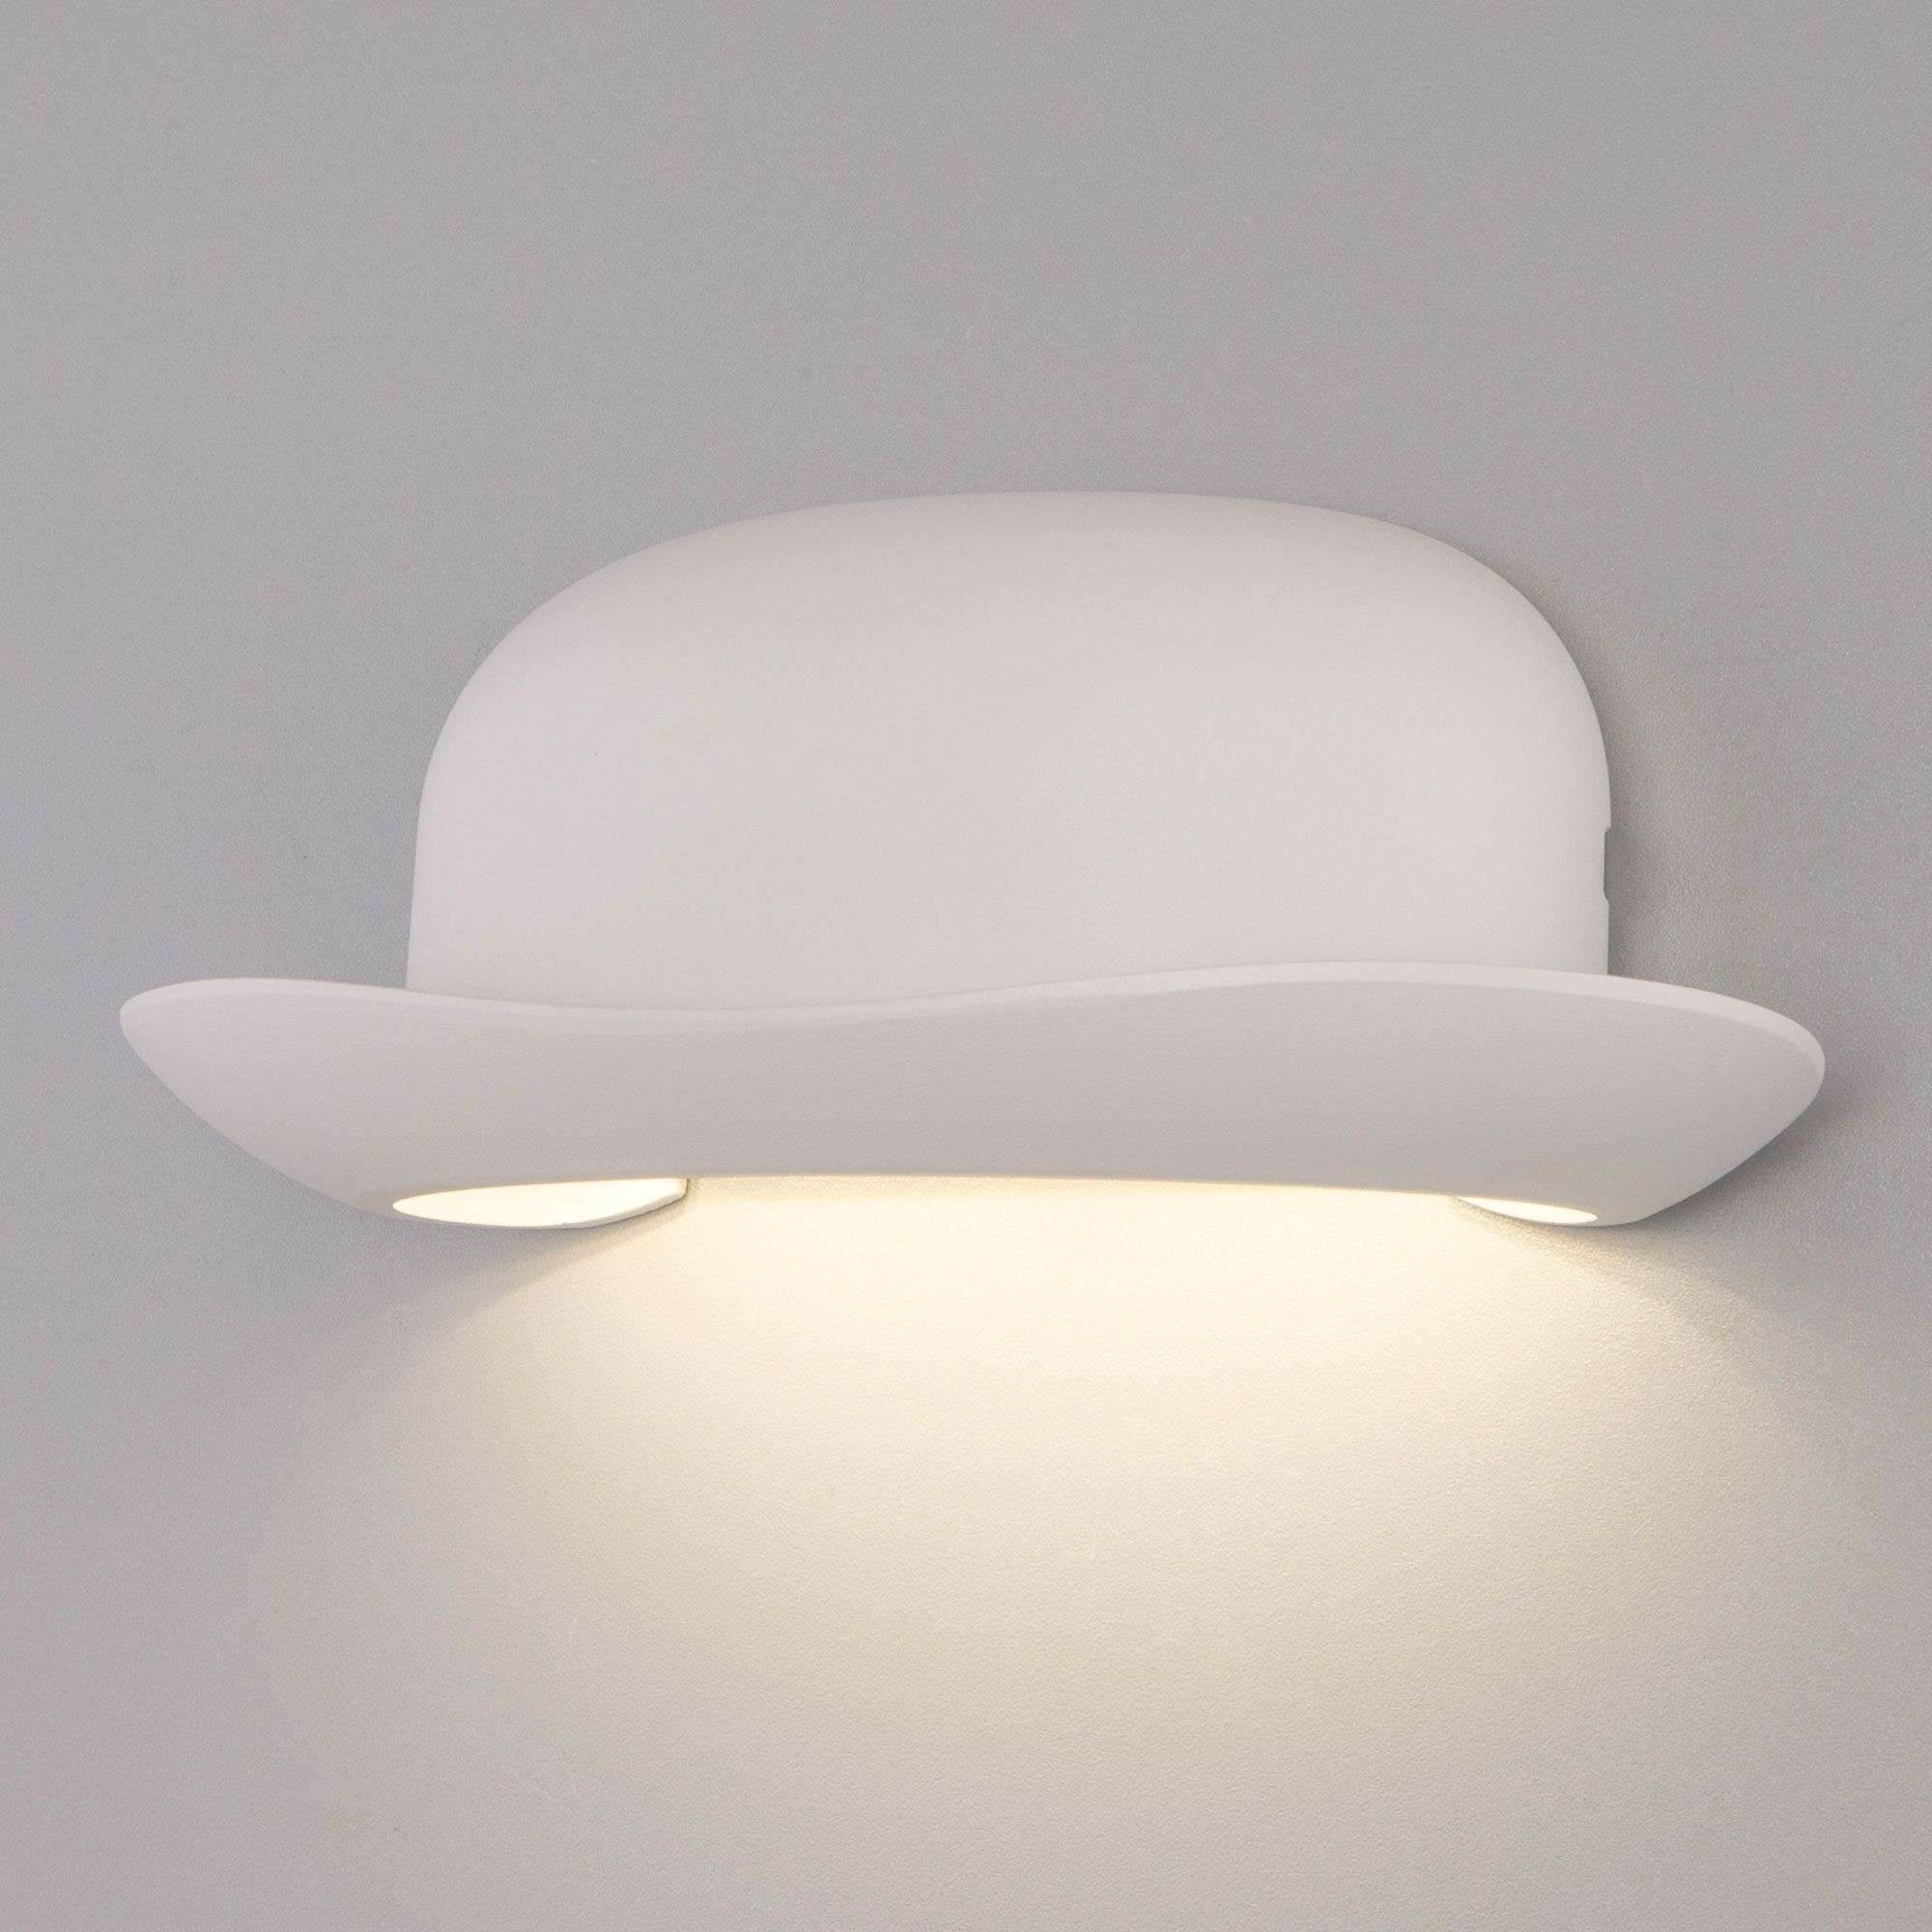 Настенный светодиодный светильник Keip LED белый Keip LED белый (MRL LED 1011)